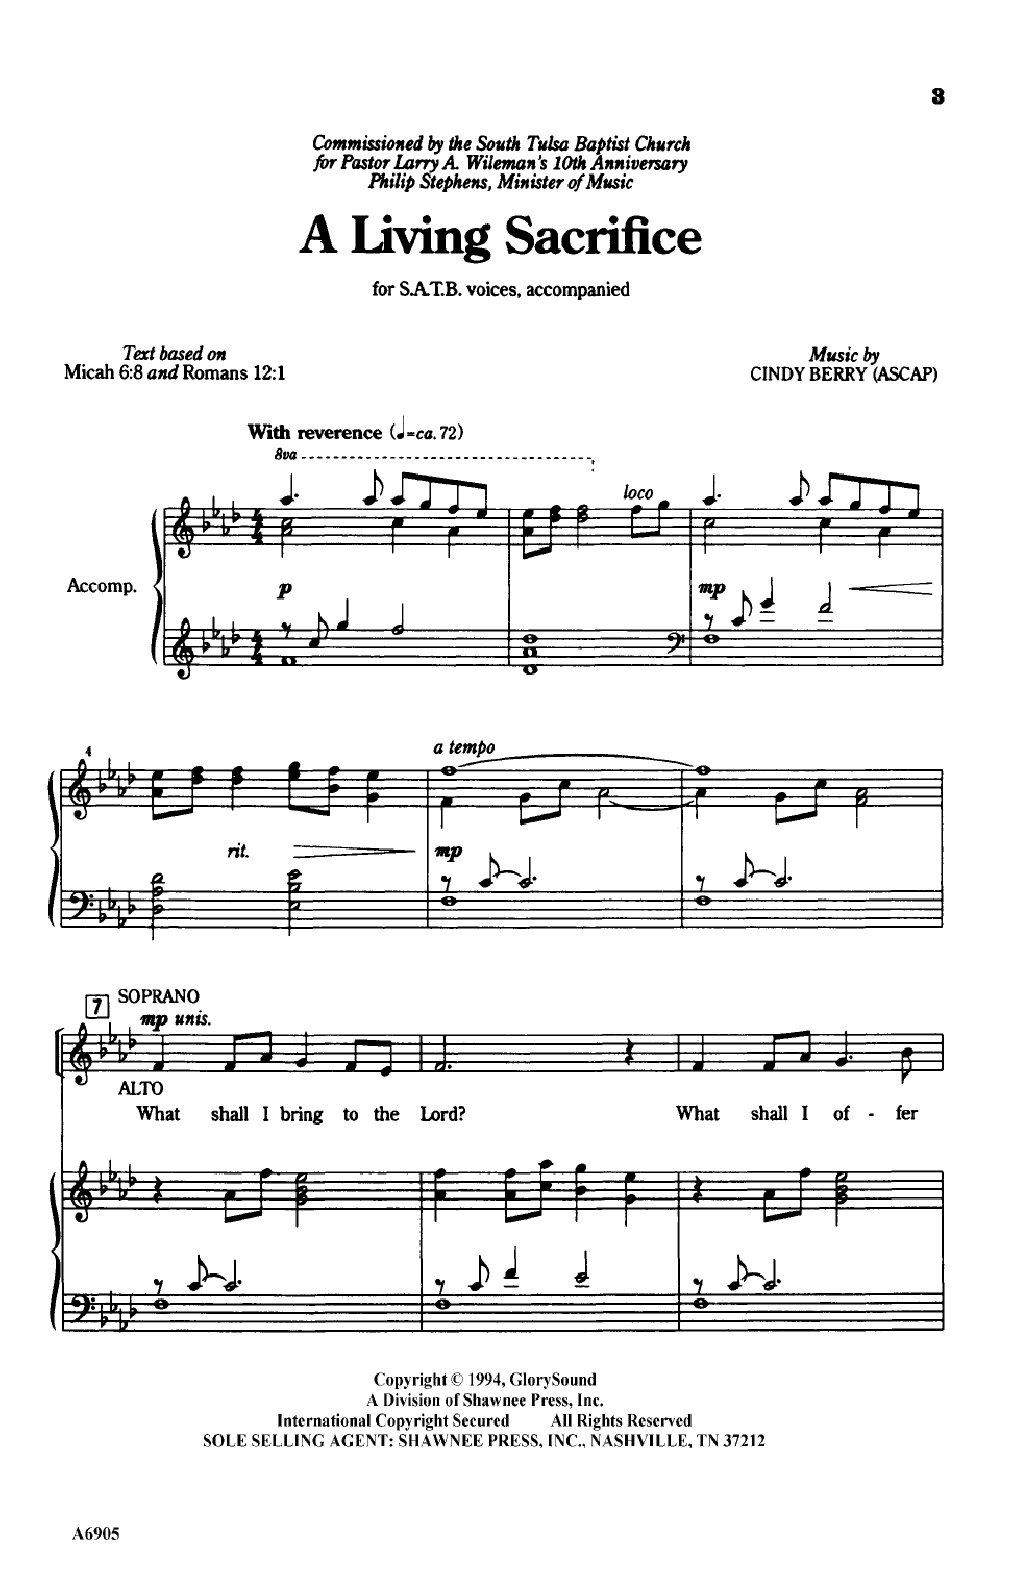 Cindy Berry A Living Sacrifice Sheet Music Notes & Chords for SATB Choir - Download or Print PDF